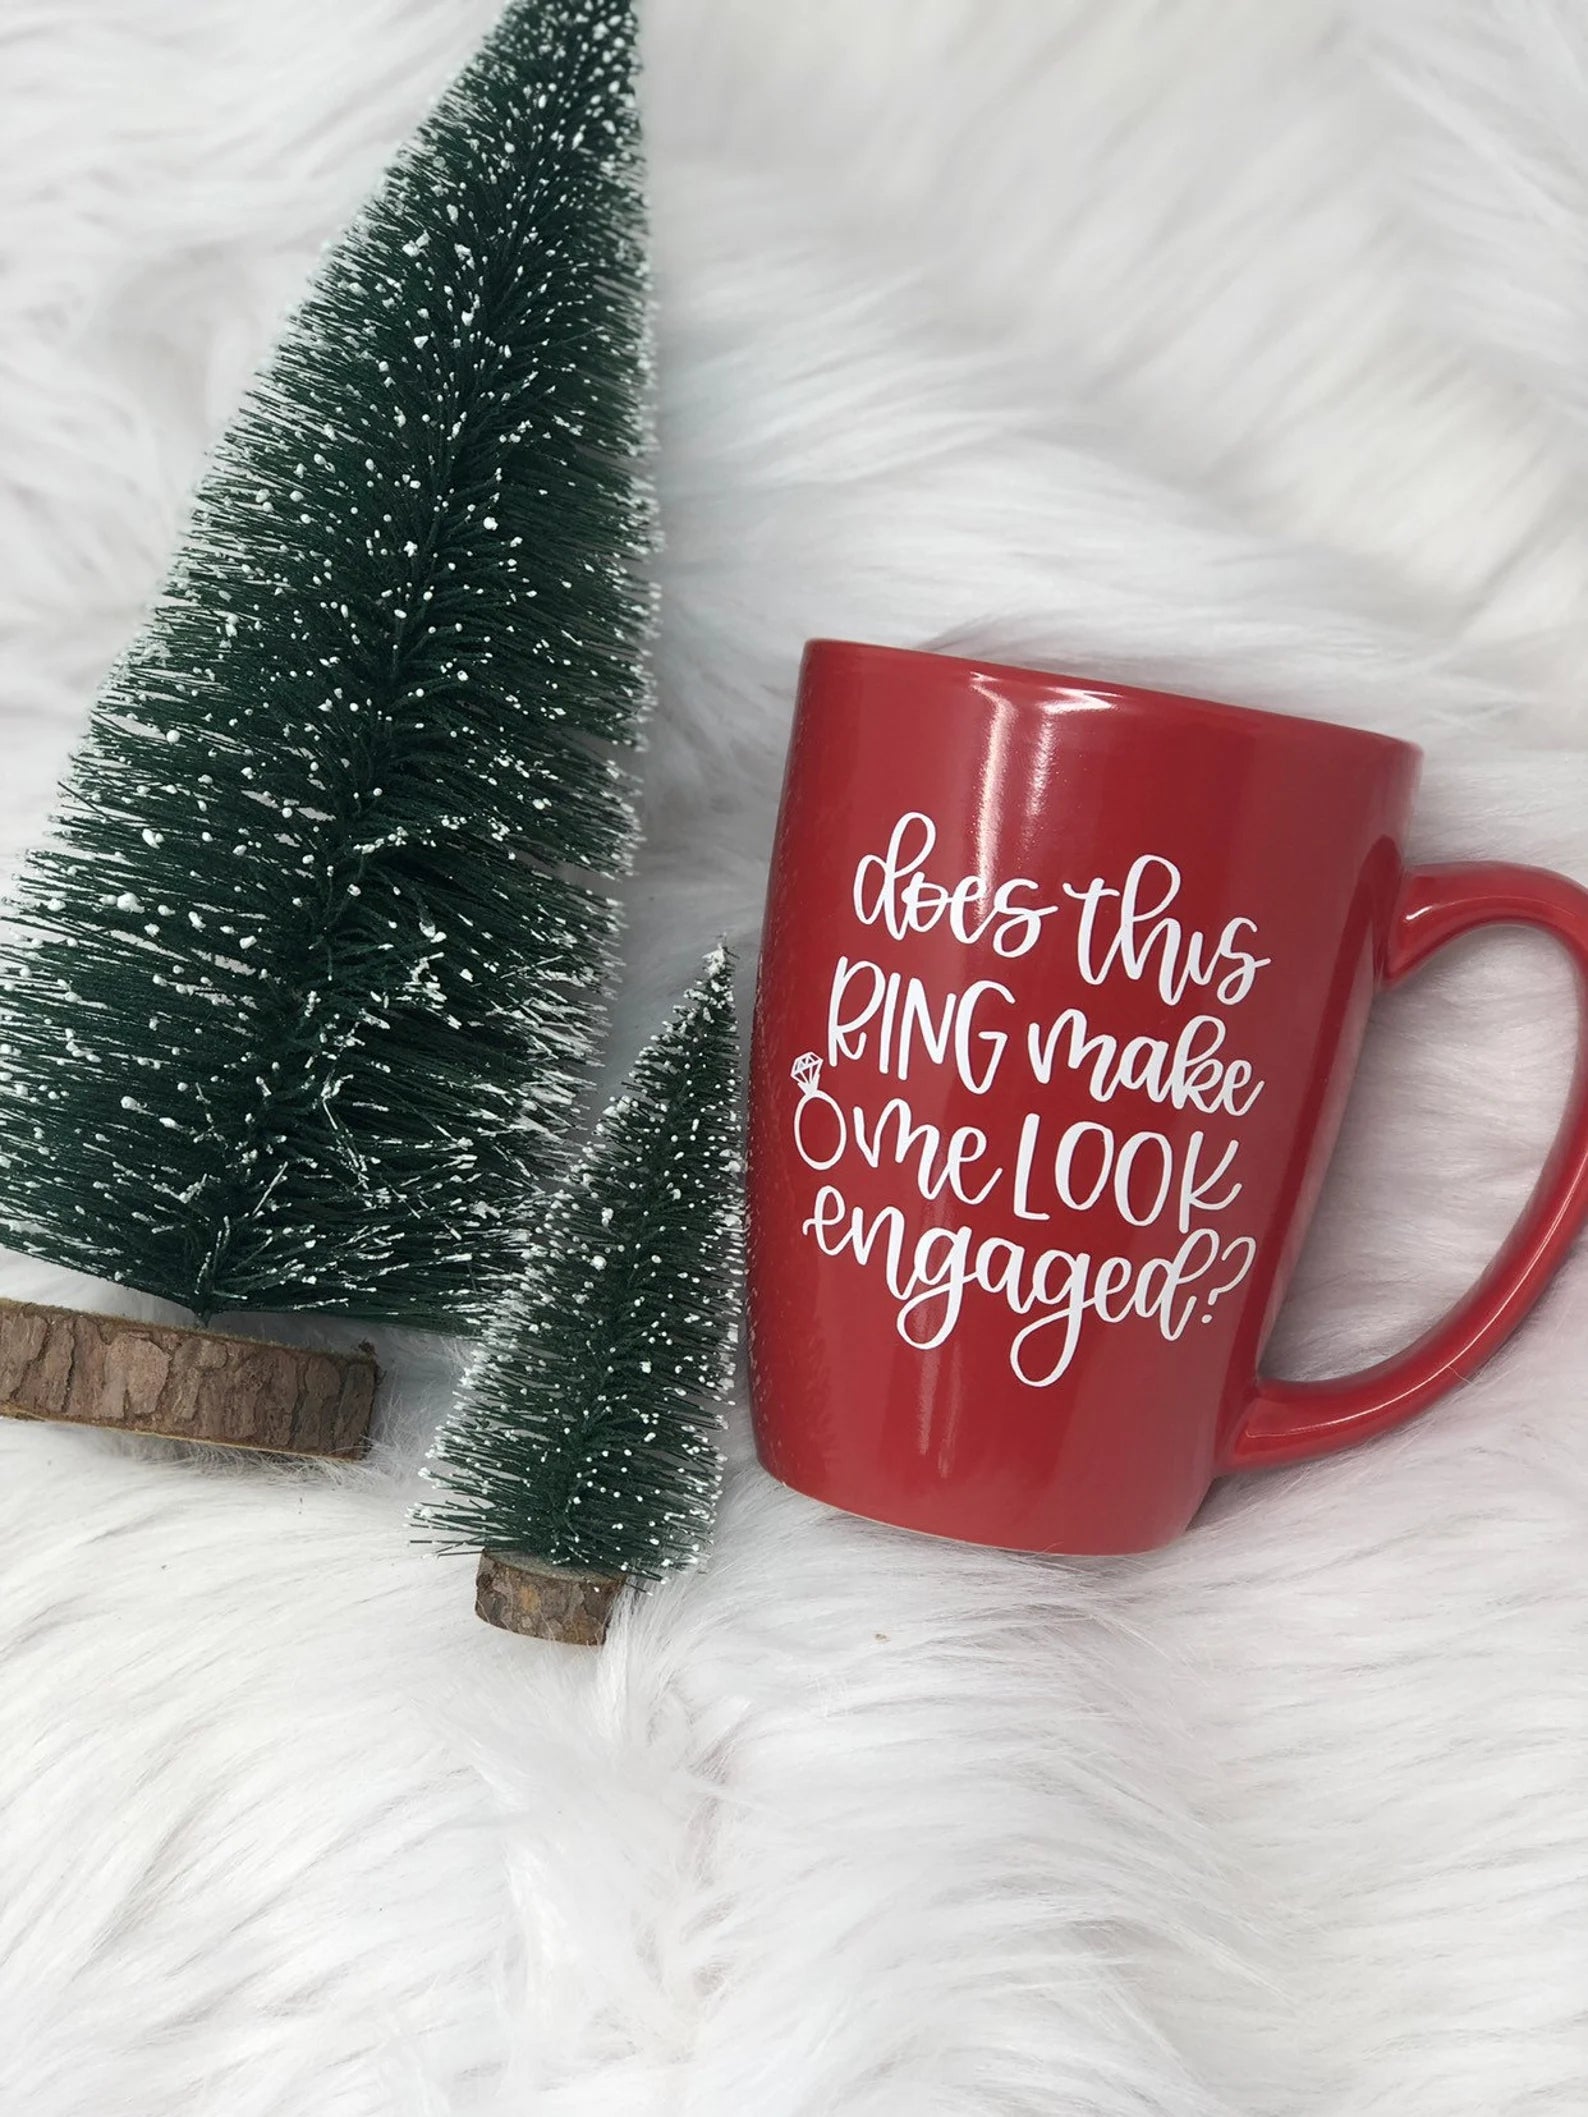 Does this ring make me look engaged red mug- Christmas engagement mug- holiday mug- future Mrs bride mug- engagement gift idea- proposal mug